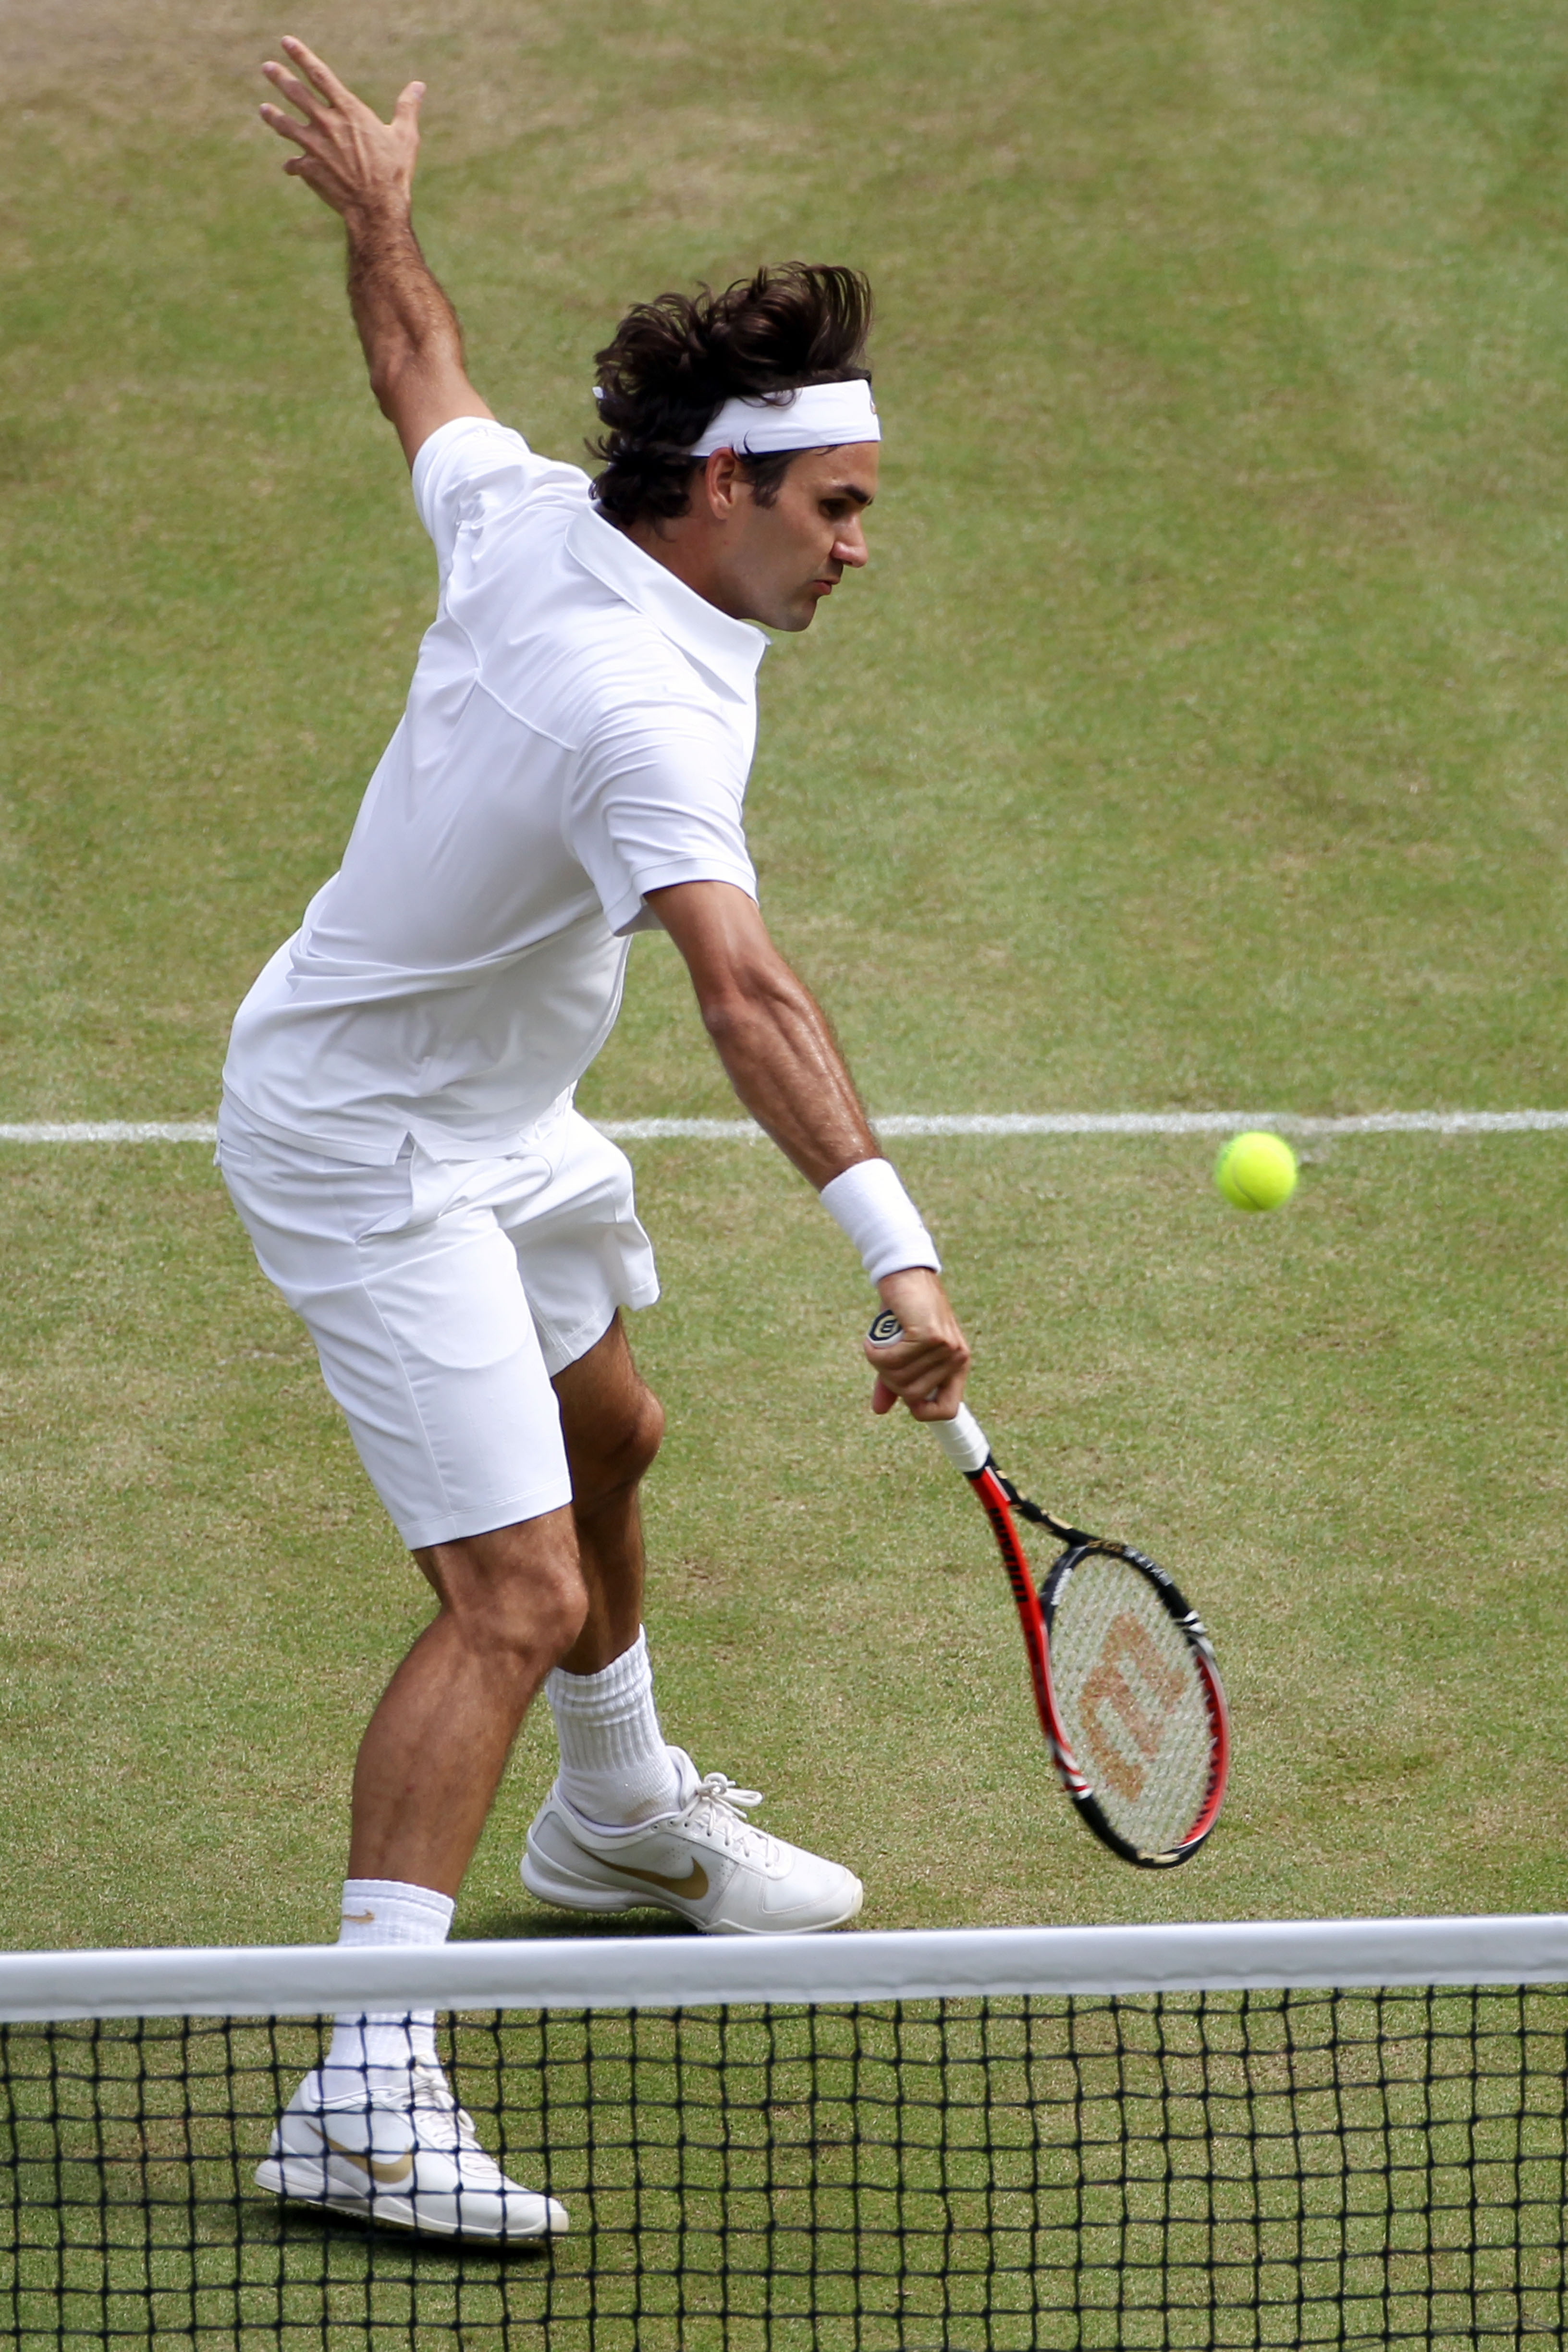 Rafael Nadal Makes Roger Federer Preference Strikingly Evident as